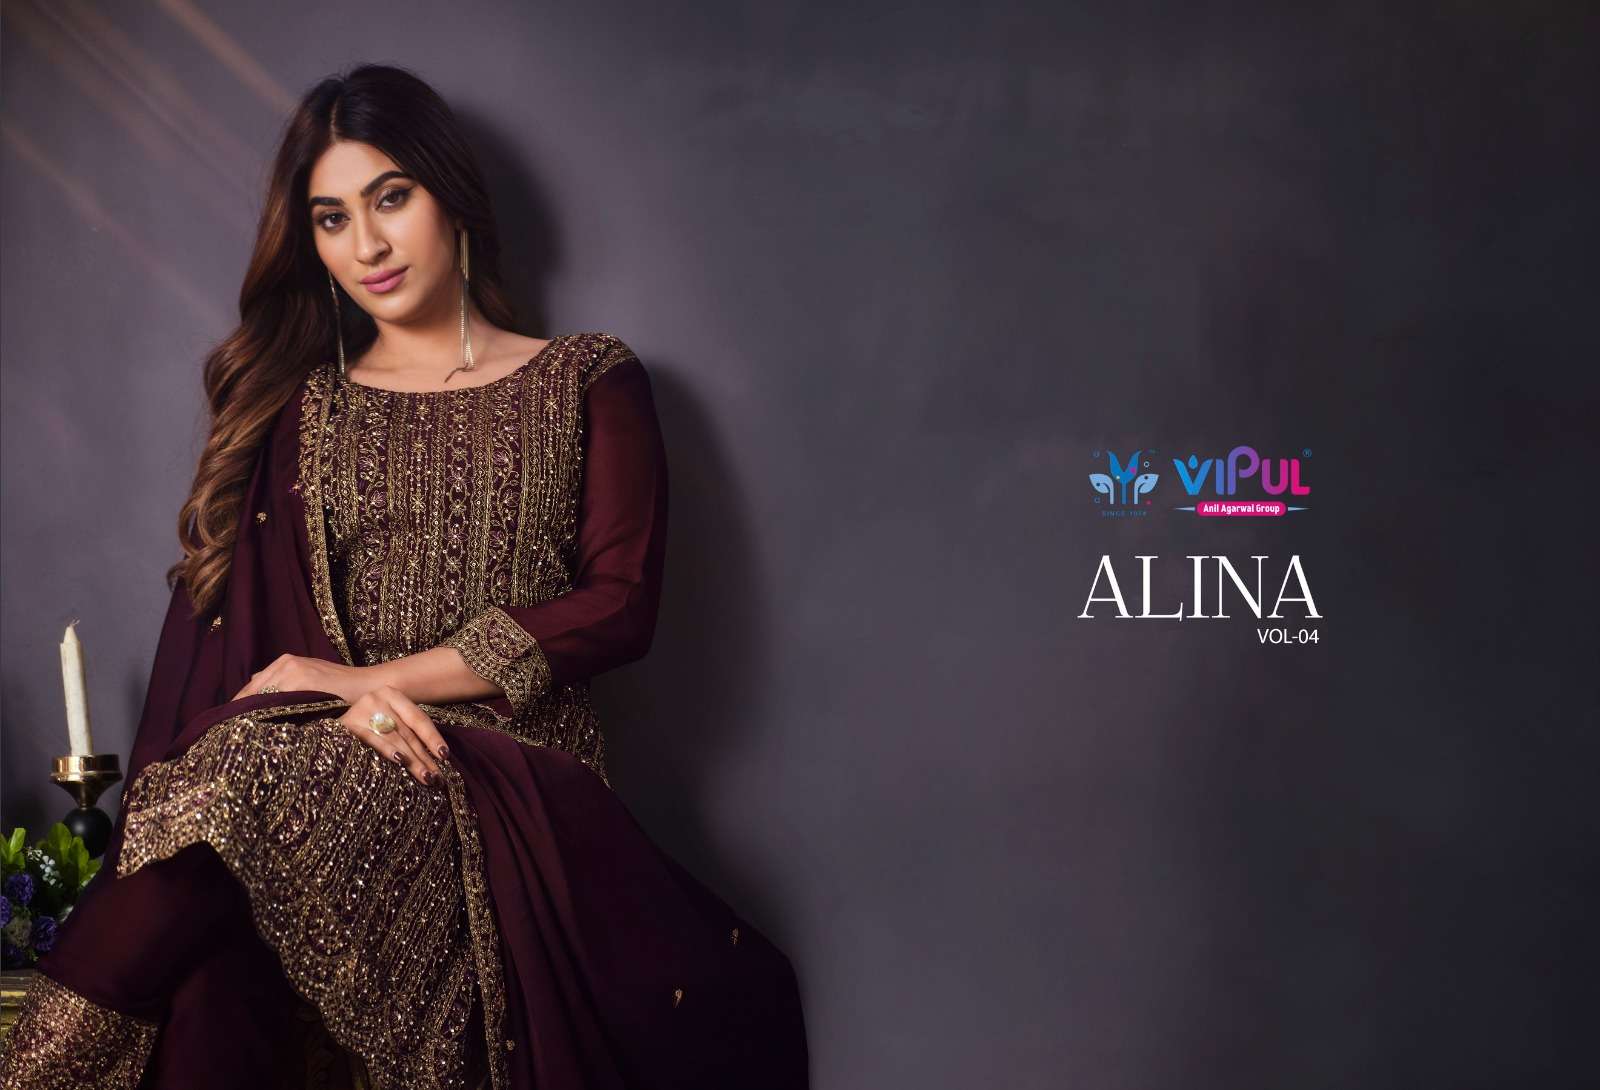 vipul fashion alina vol-4 5281-5286 series function special designer salwar suits latest catalogue design 2023